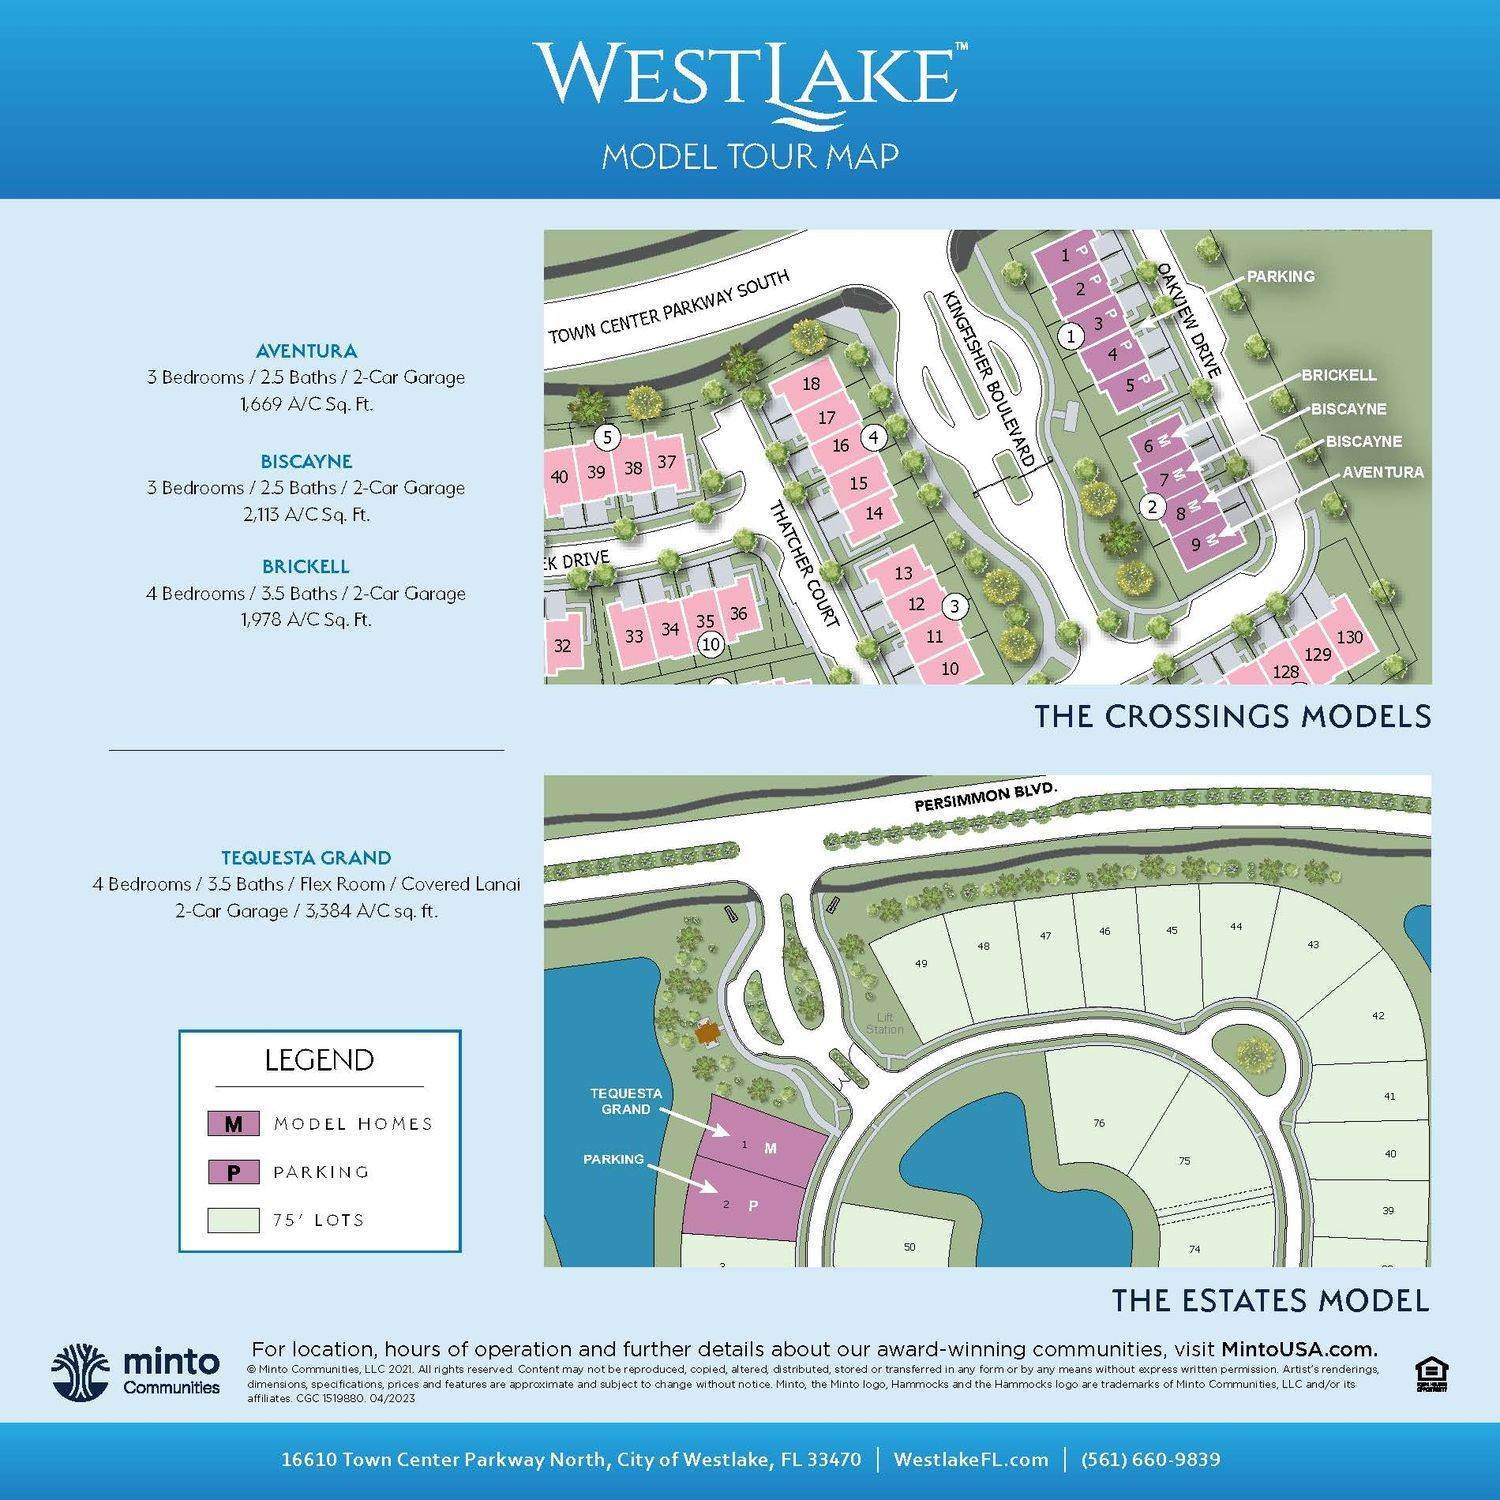 8. Westlake建于 16610 Town Center Parkway North, 克萨哈奇, FL 33470